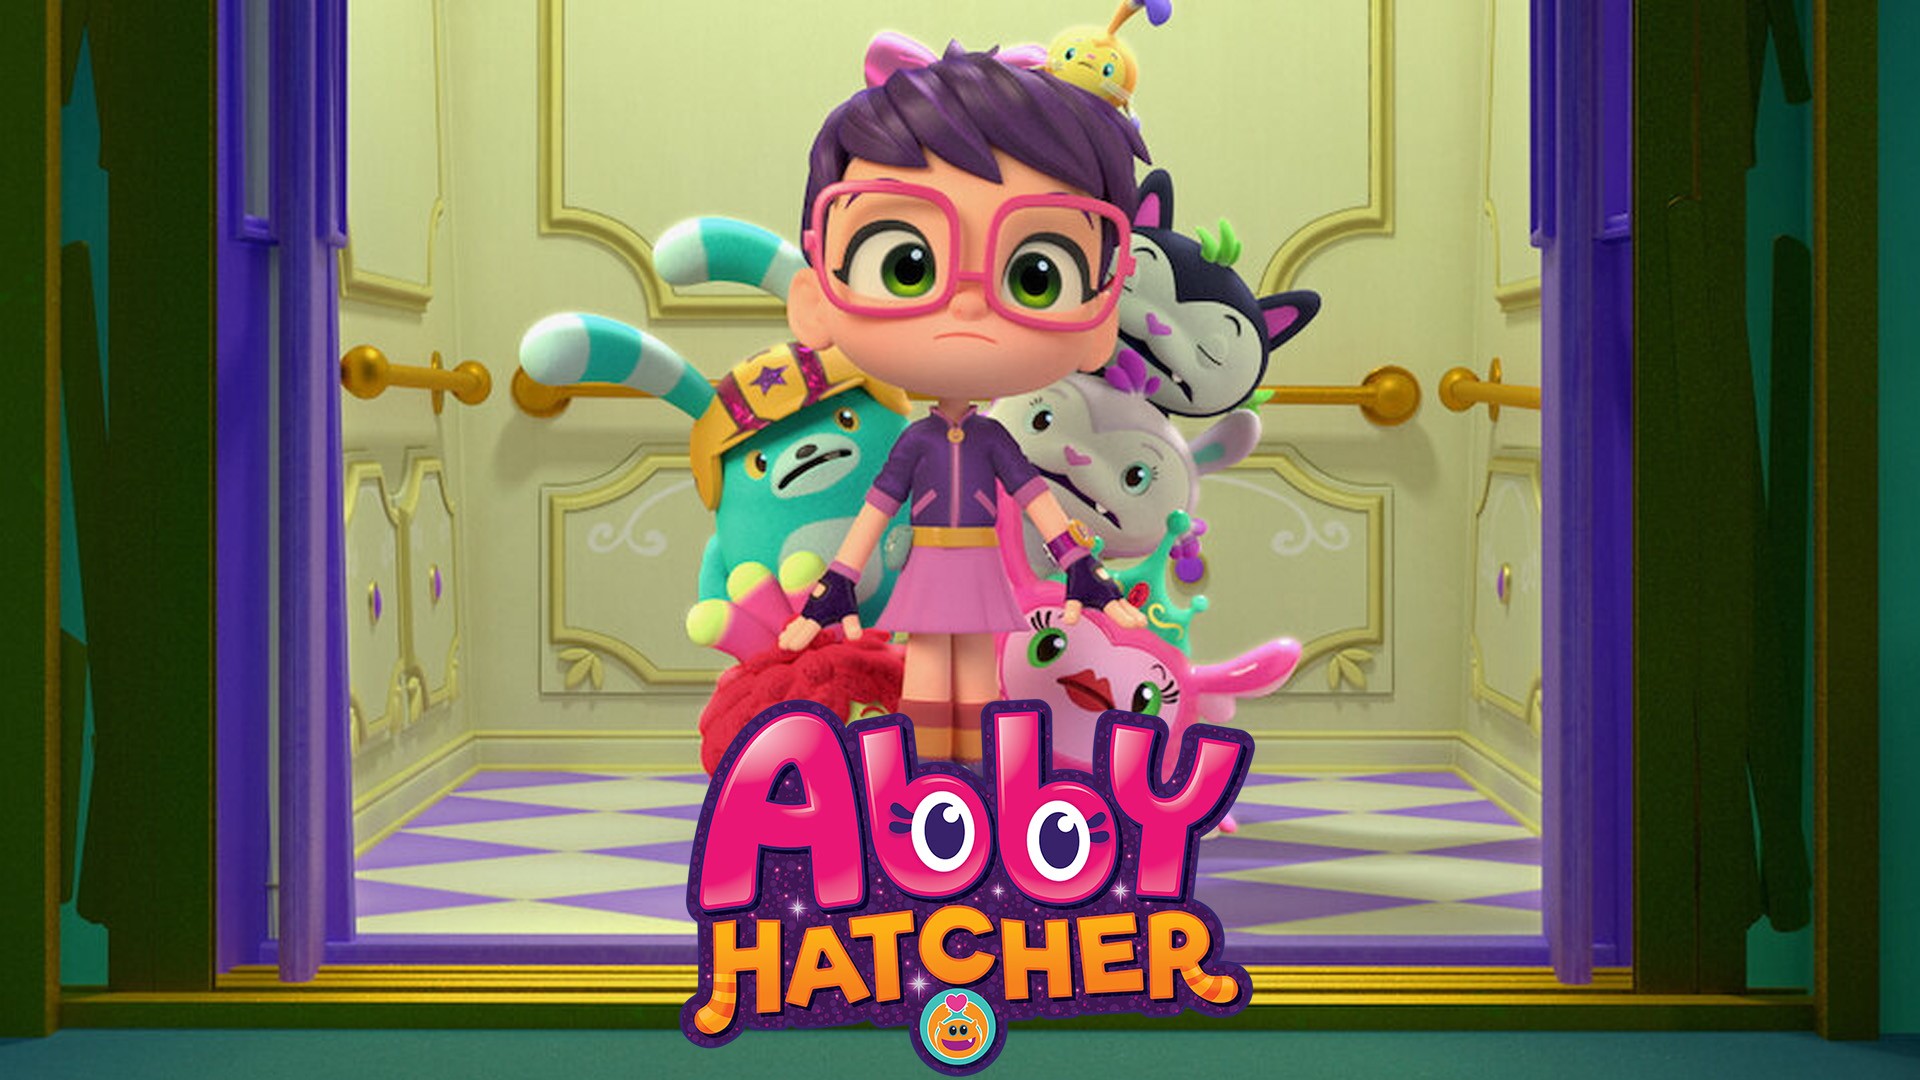 Abby Hatcher